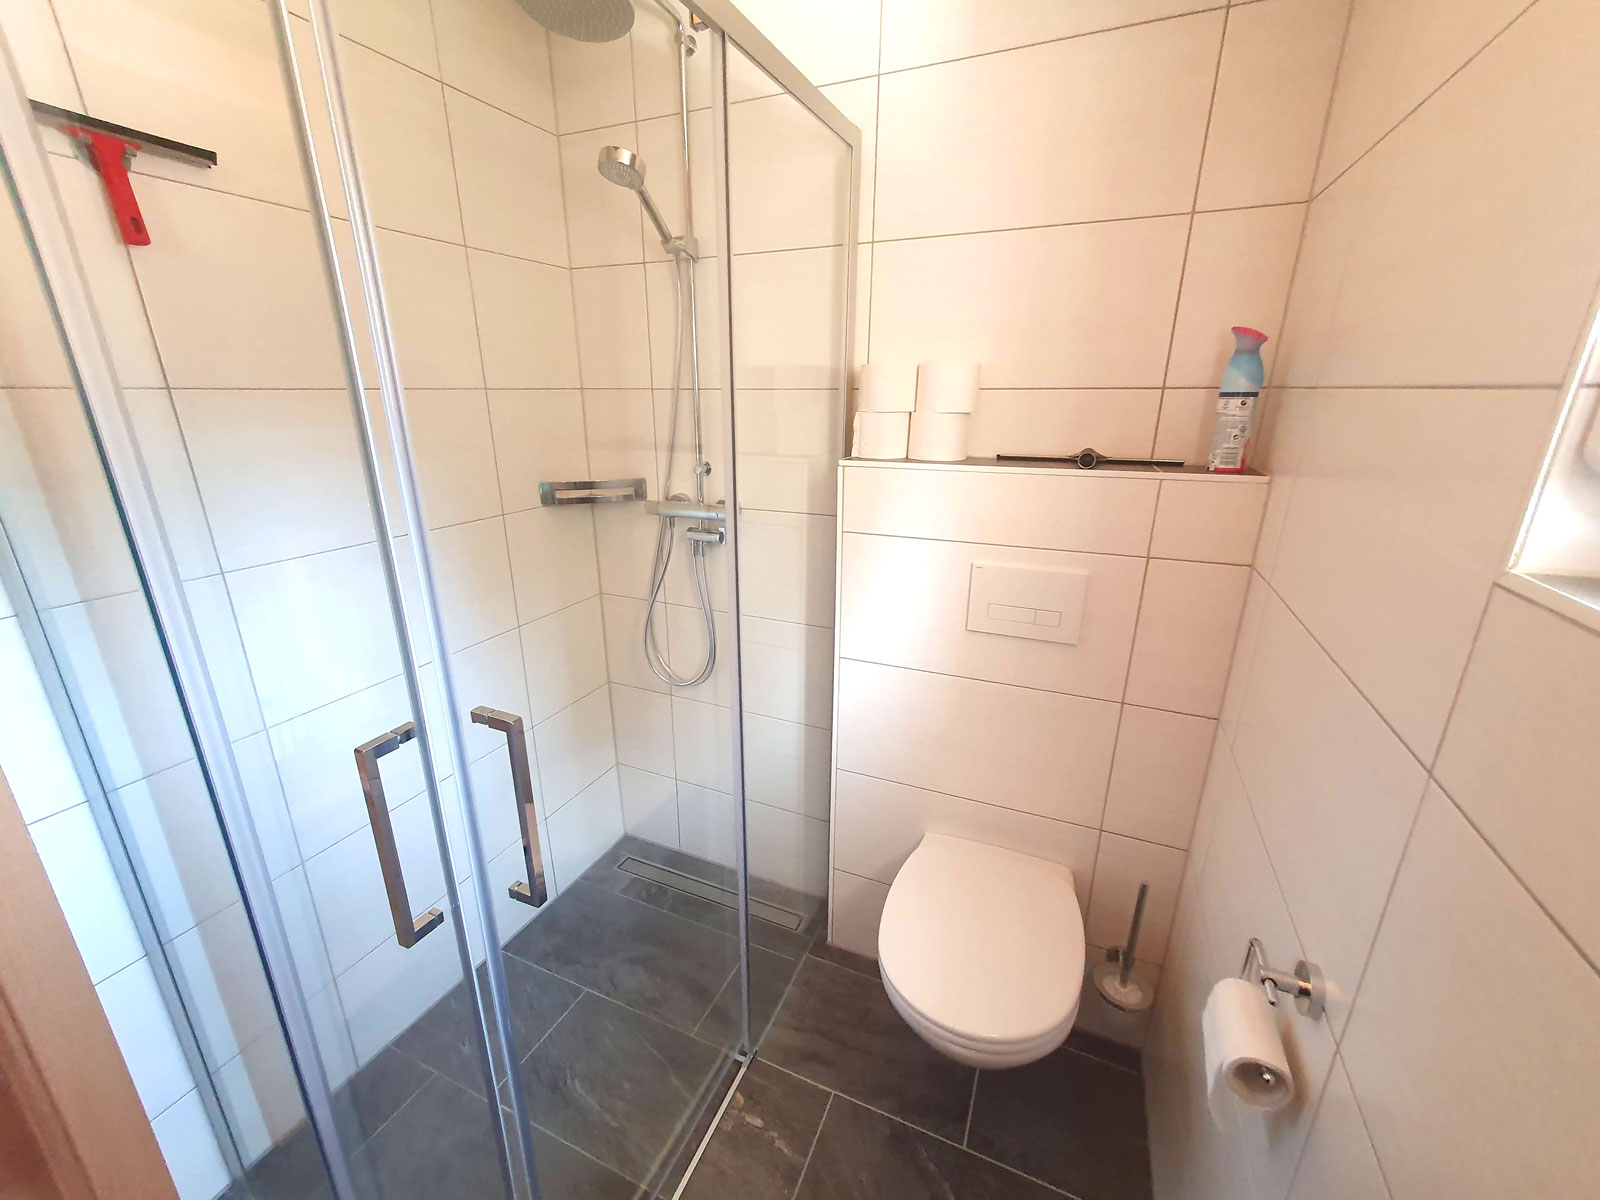 Bathroom 1st floor toilet Berghaus Edelhirsch